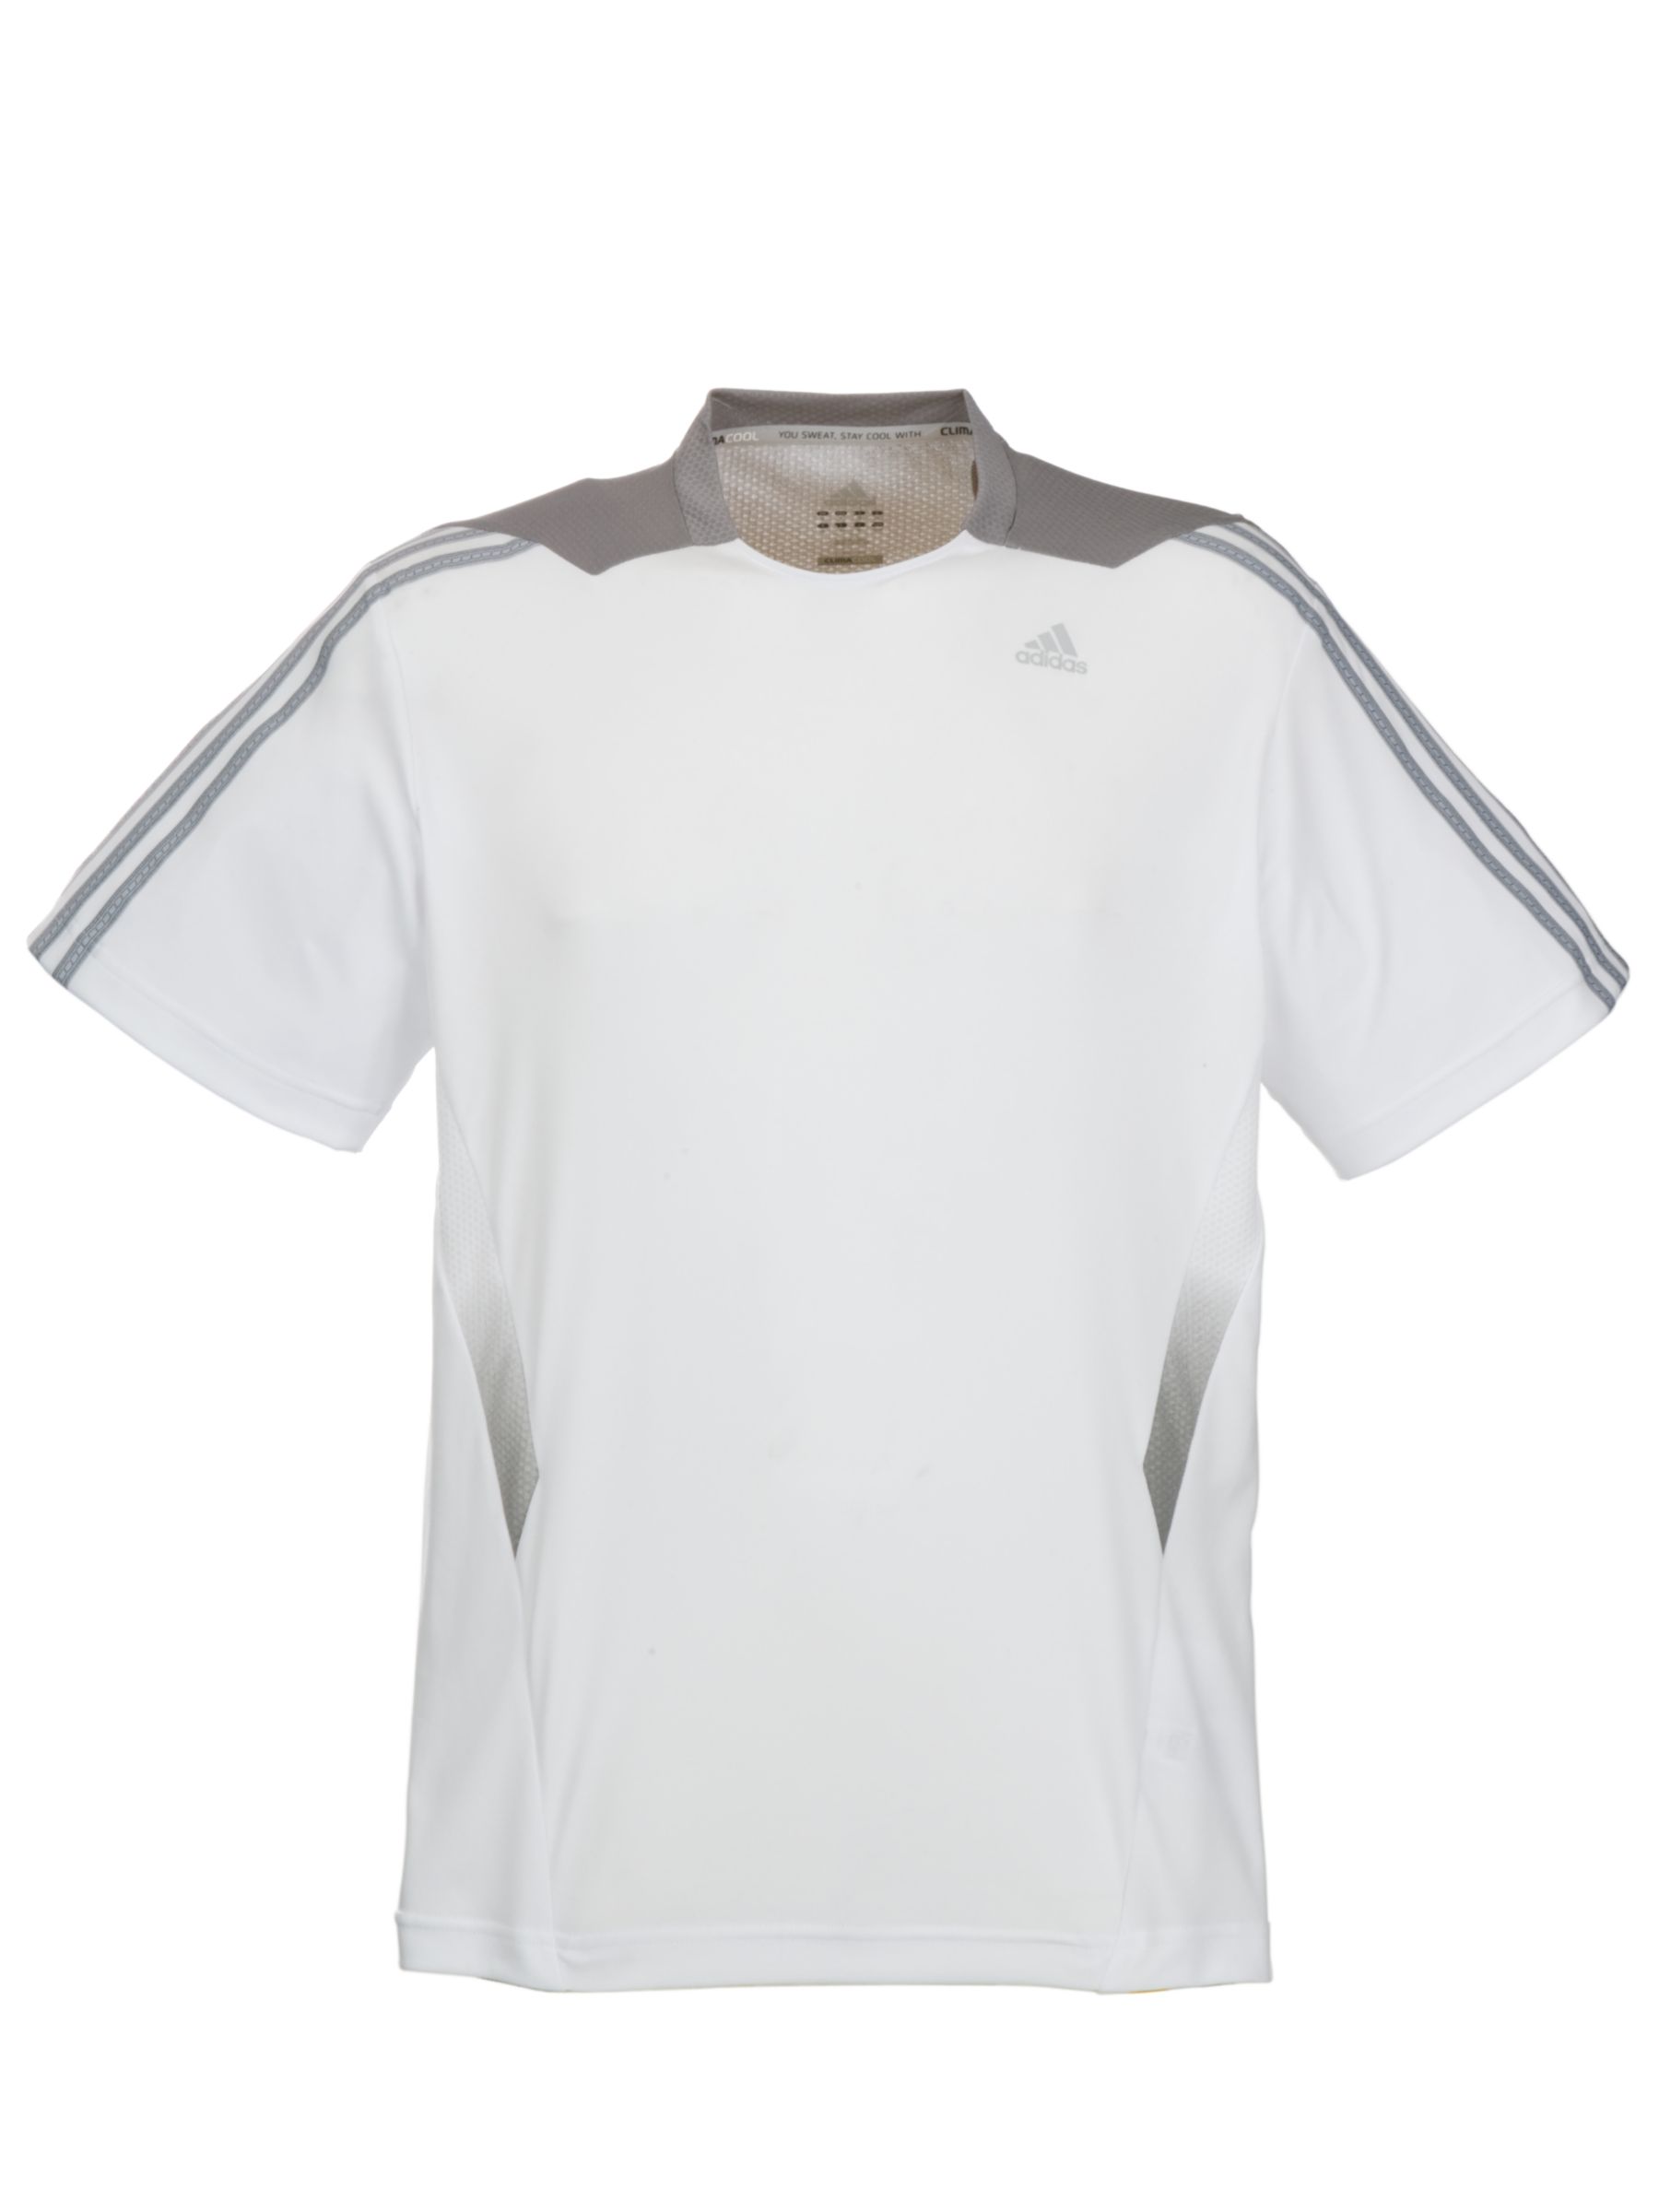 Adidas Clima365 T-Shirt, White/Shift grey